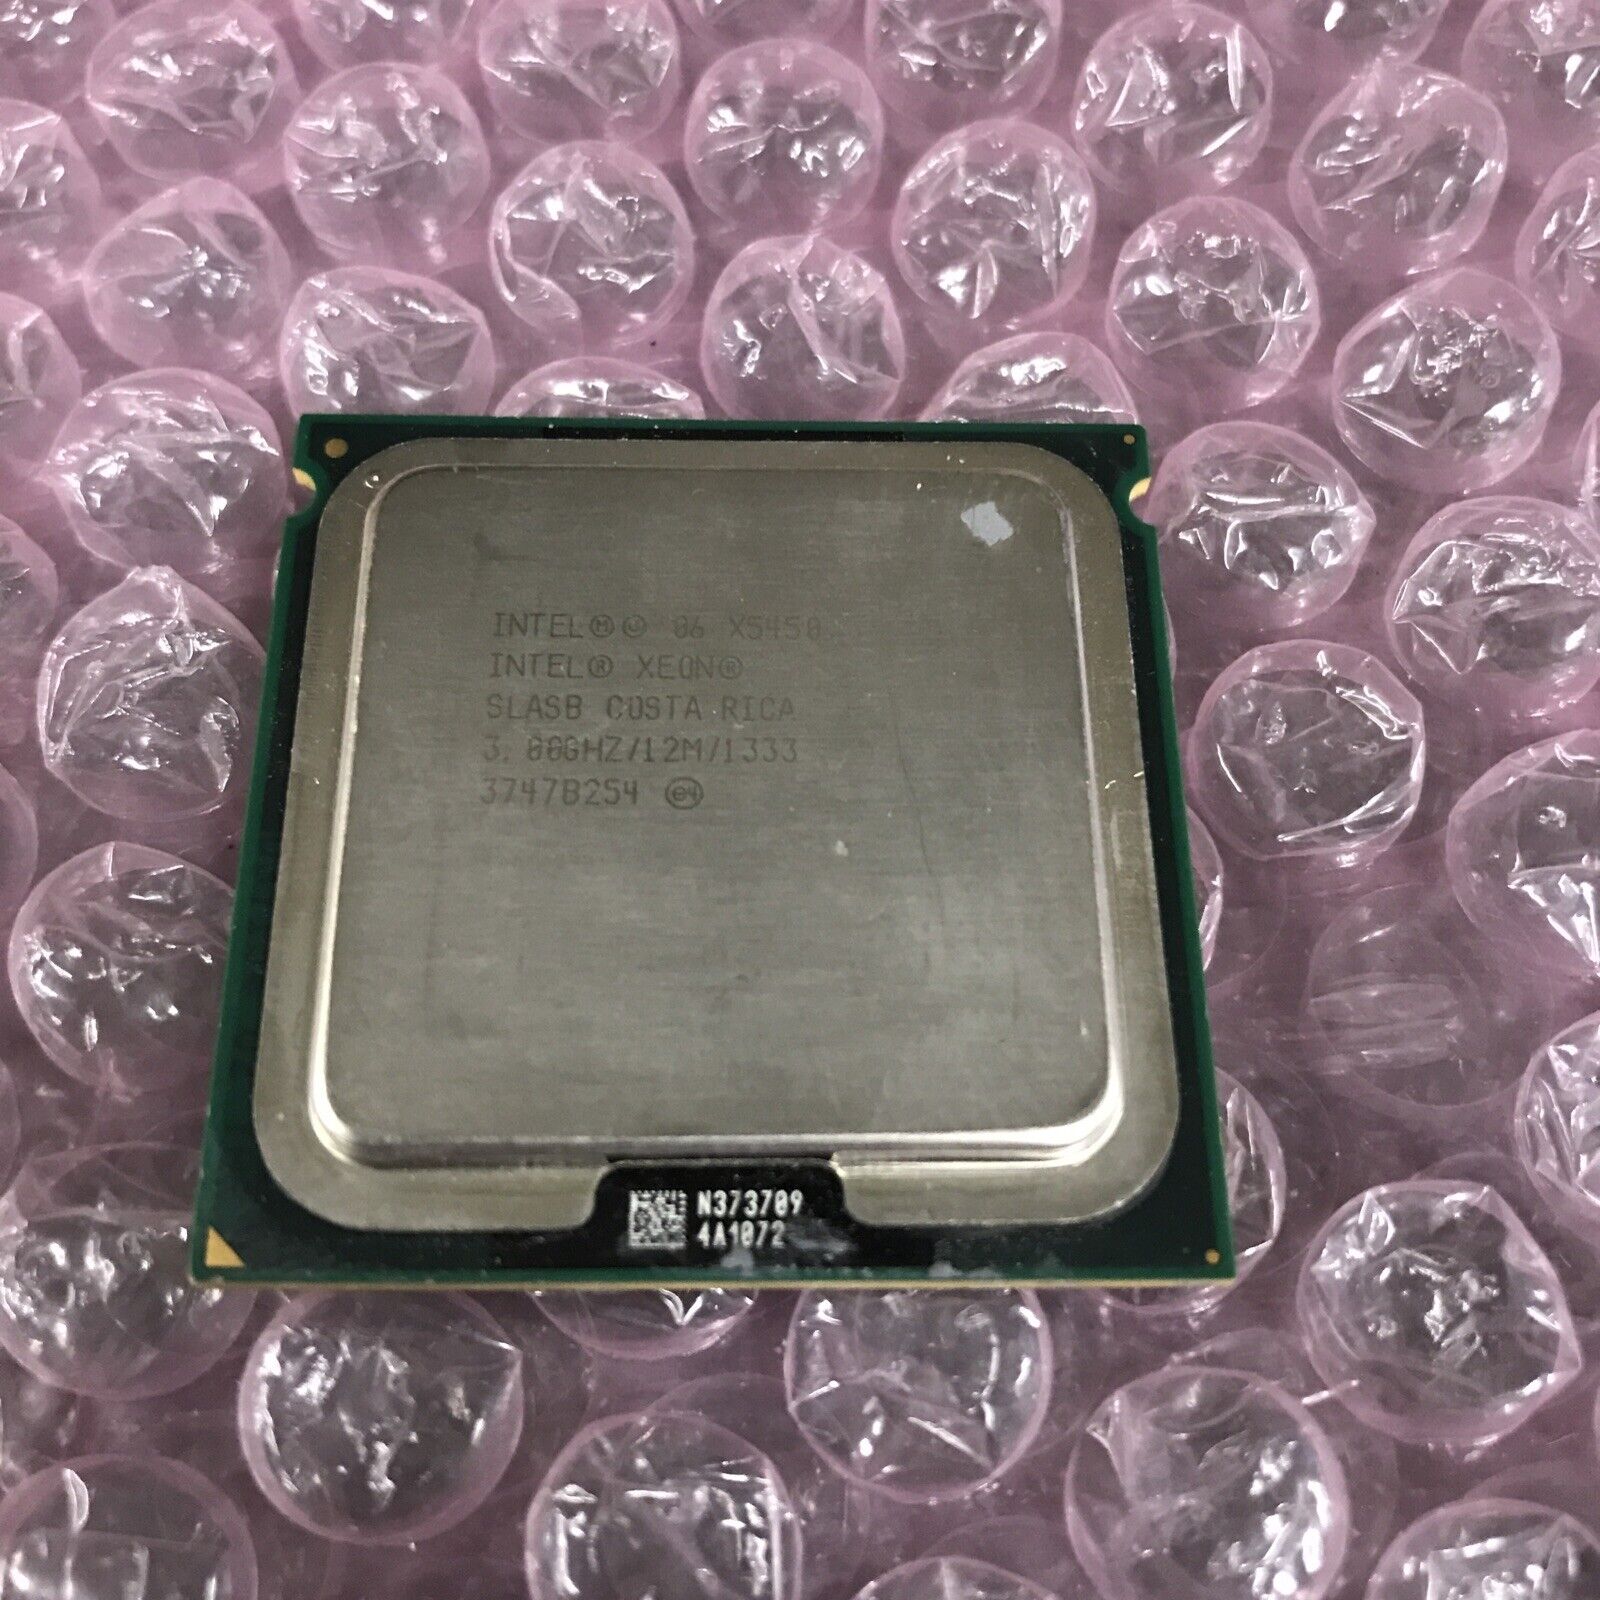 Intel Xeon X5450 SLASB RICA 3.00GHZ (Tested and Working)